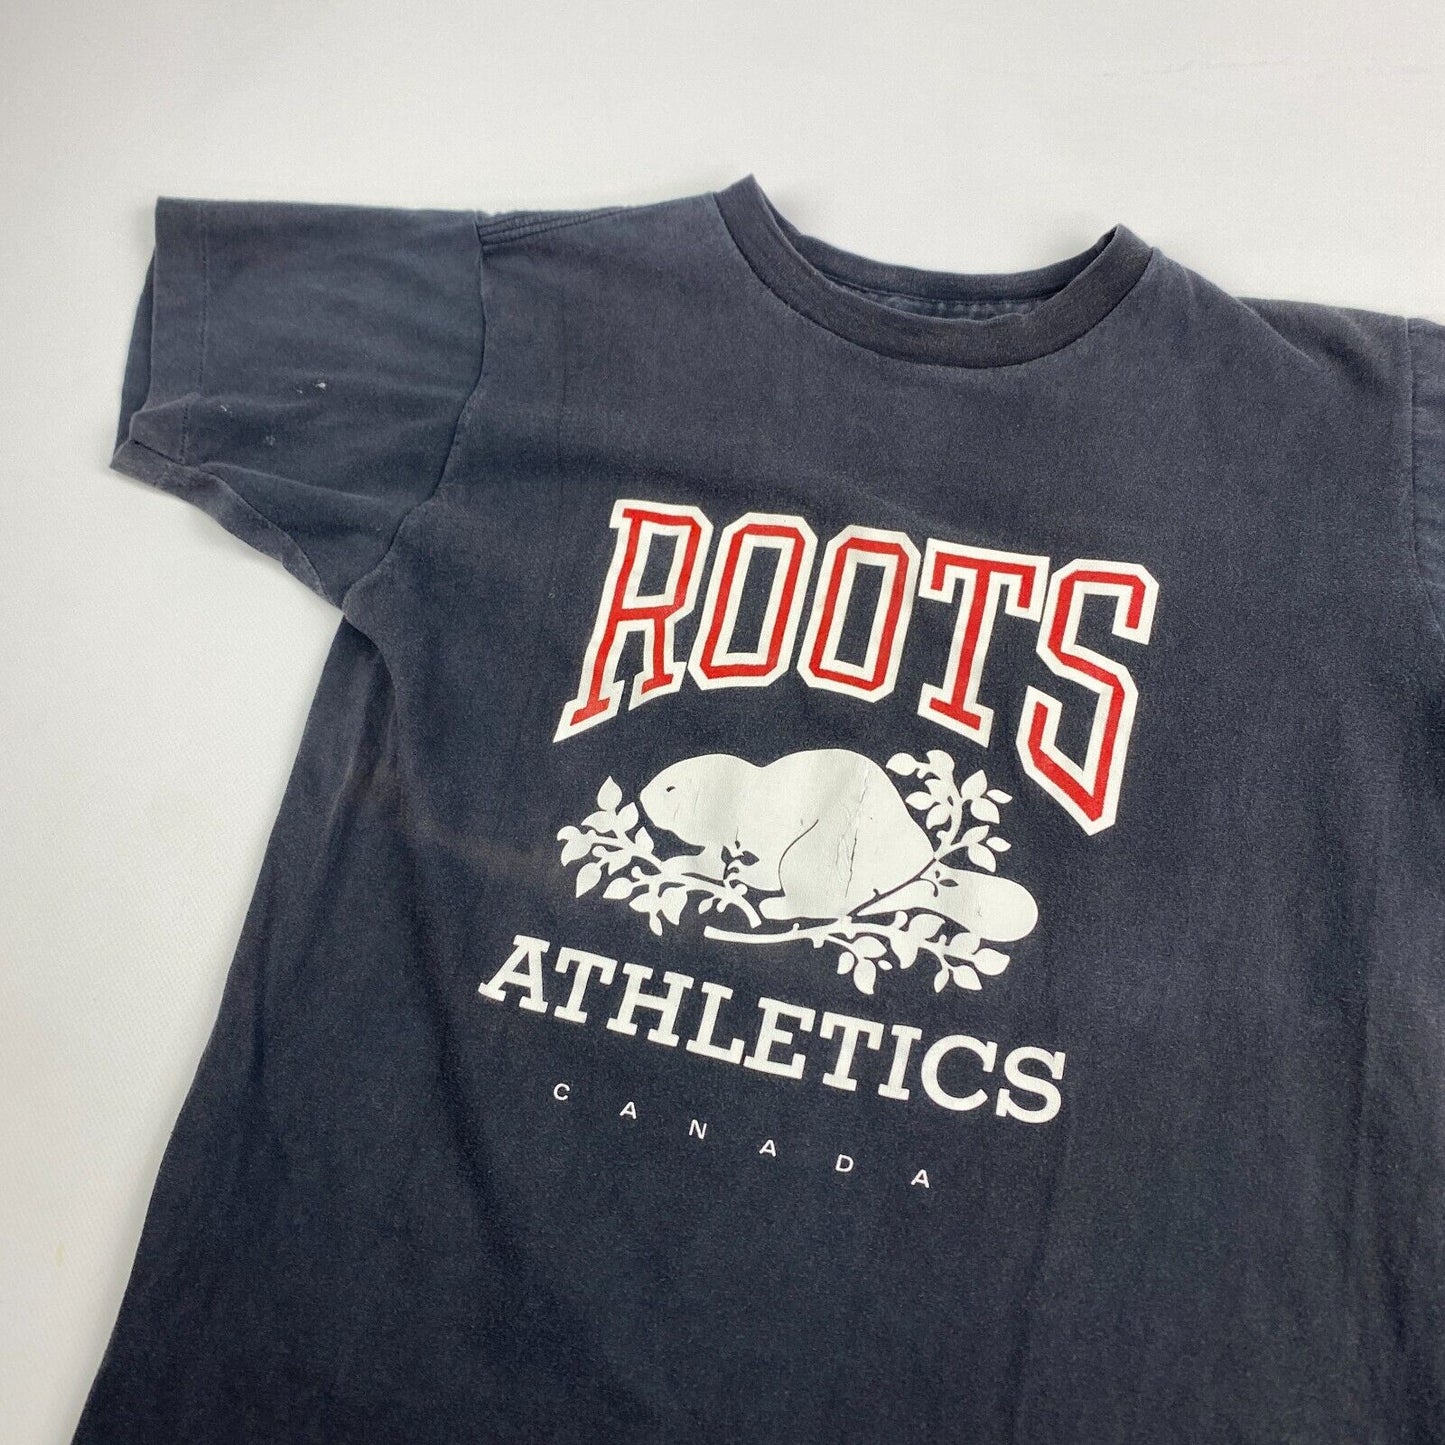 VINTAGE 90s ROOTS Athletics Canada Faded Black T-Shirt sz Small Men